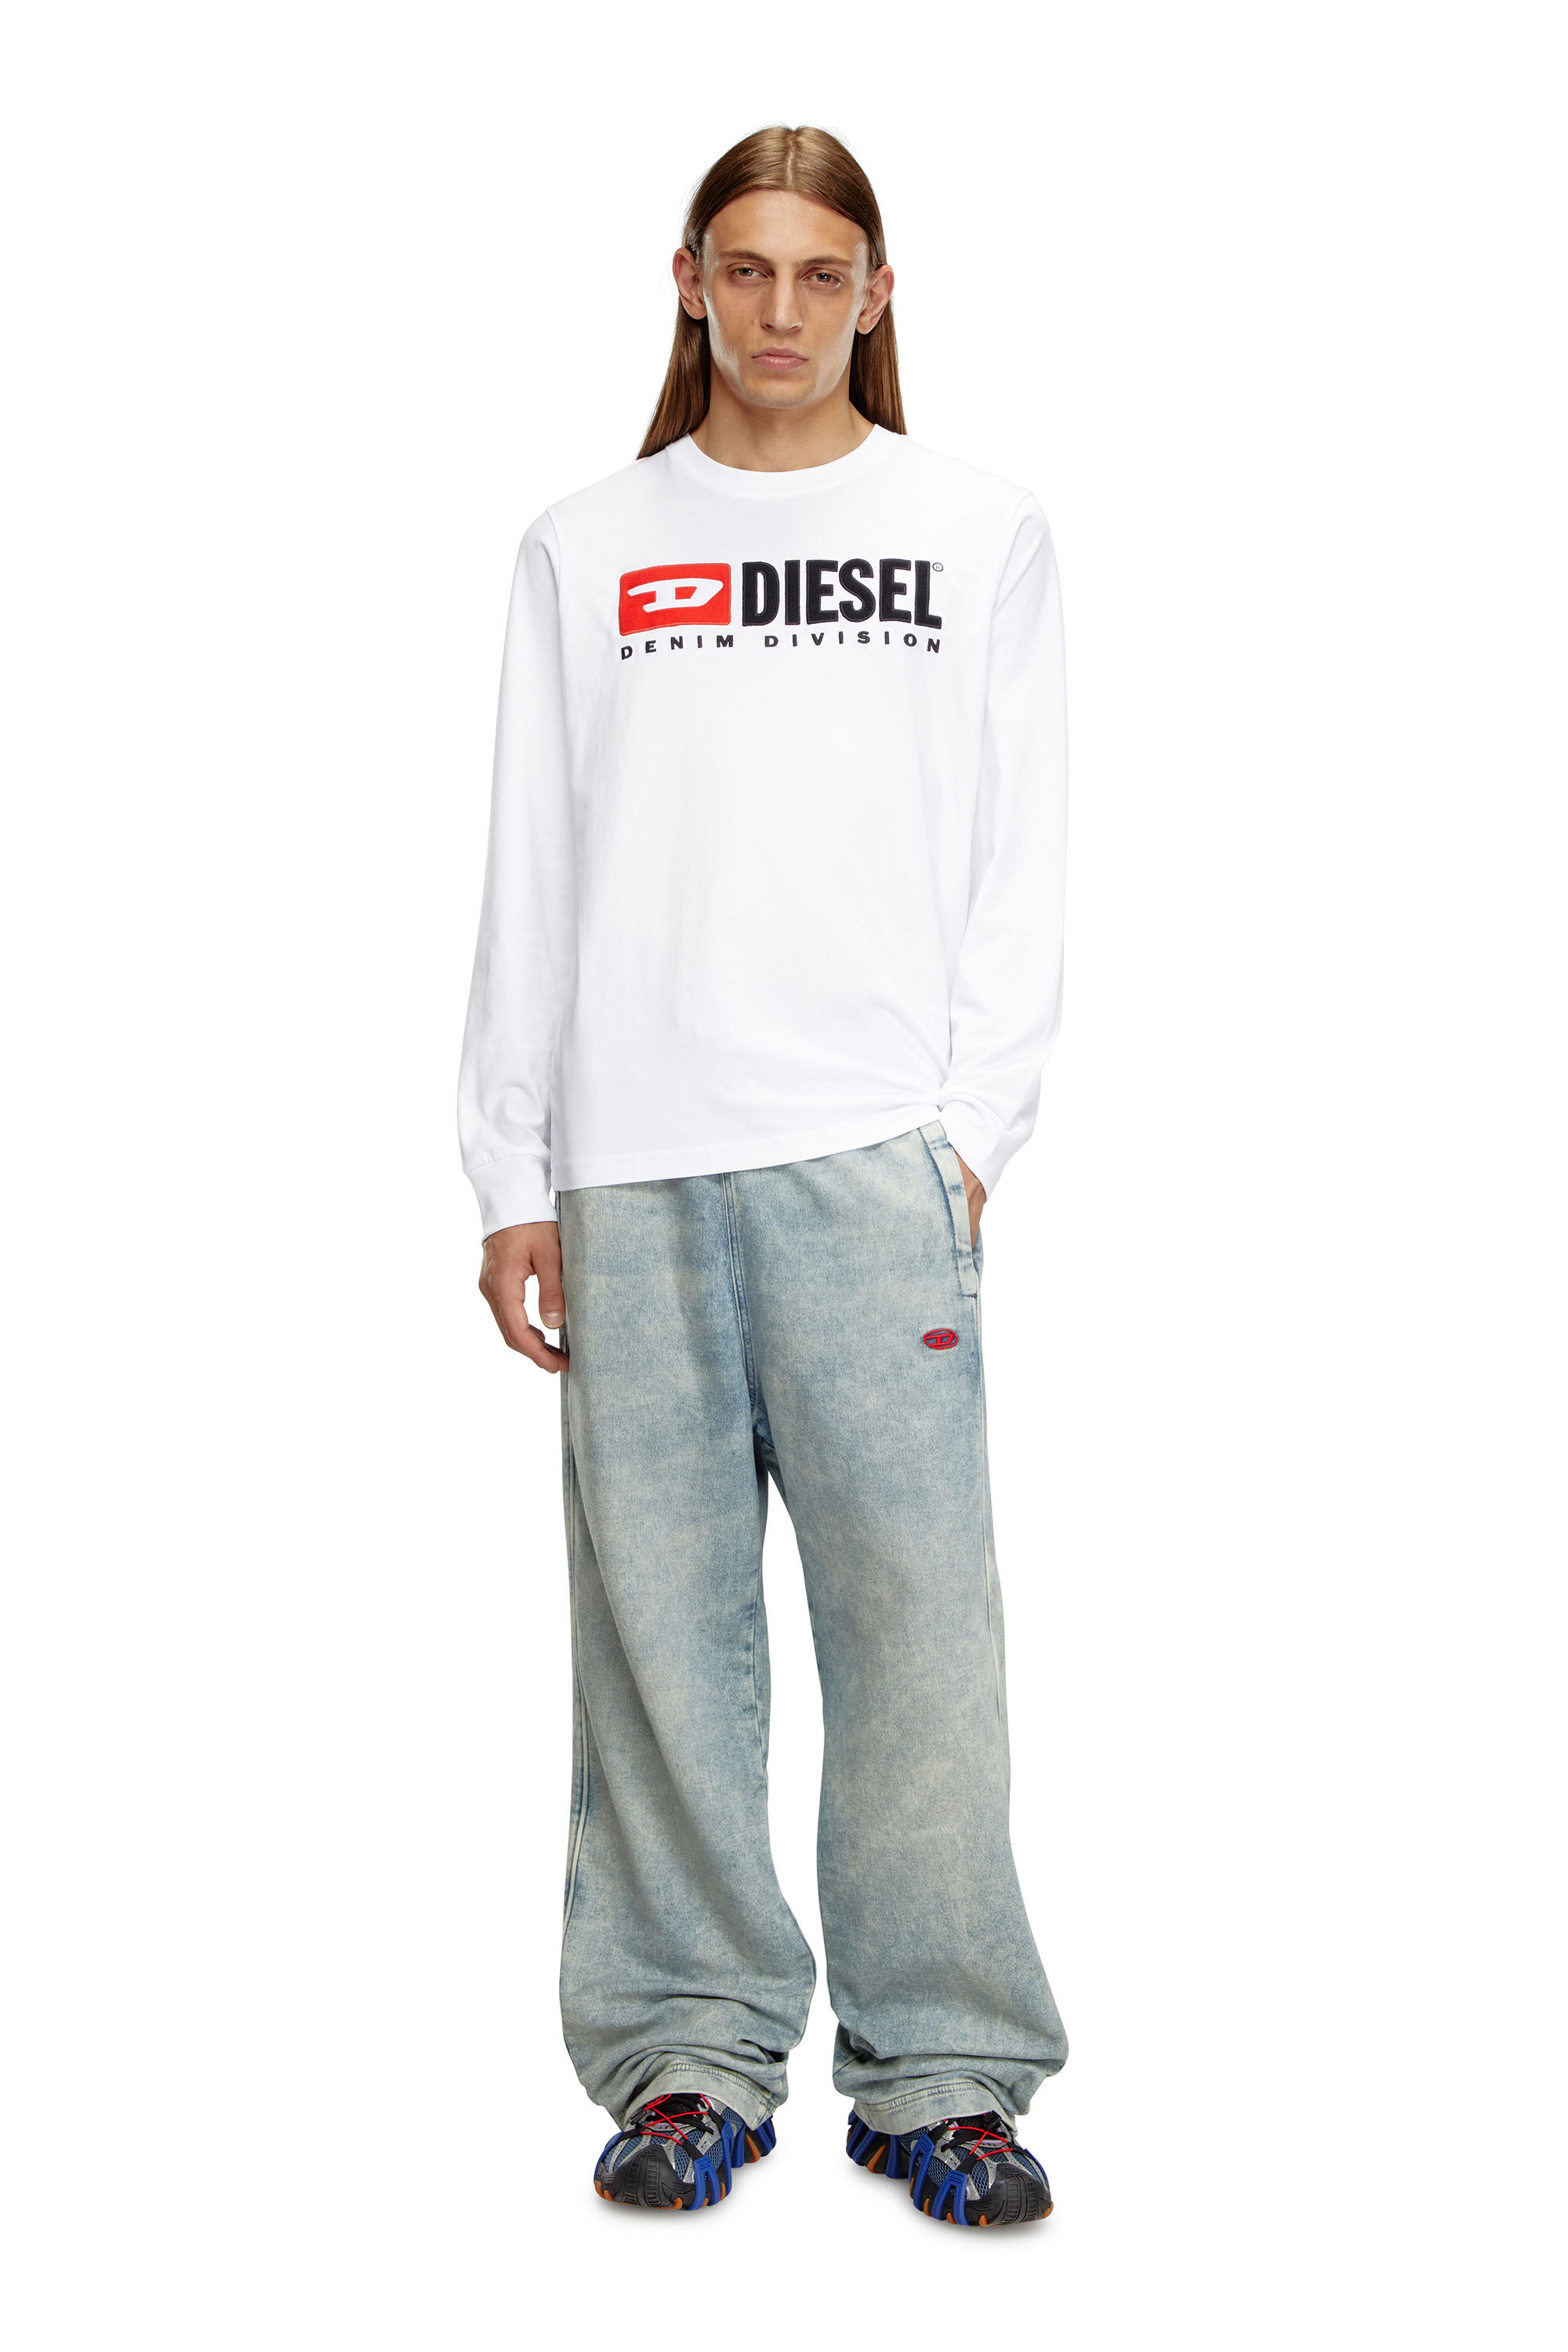 Diesel - T-JUST-LS-DIV, Hombre Camiseta de manga larga con bordado in Blanco - Image 1